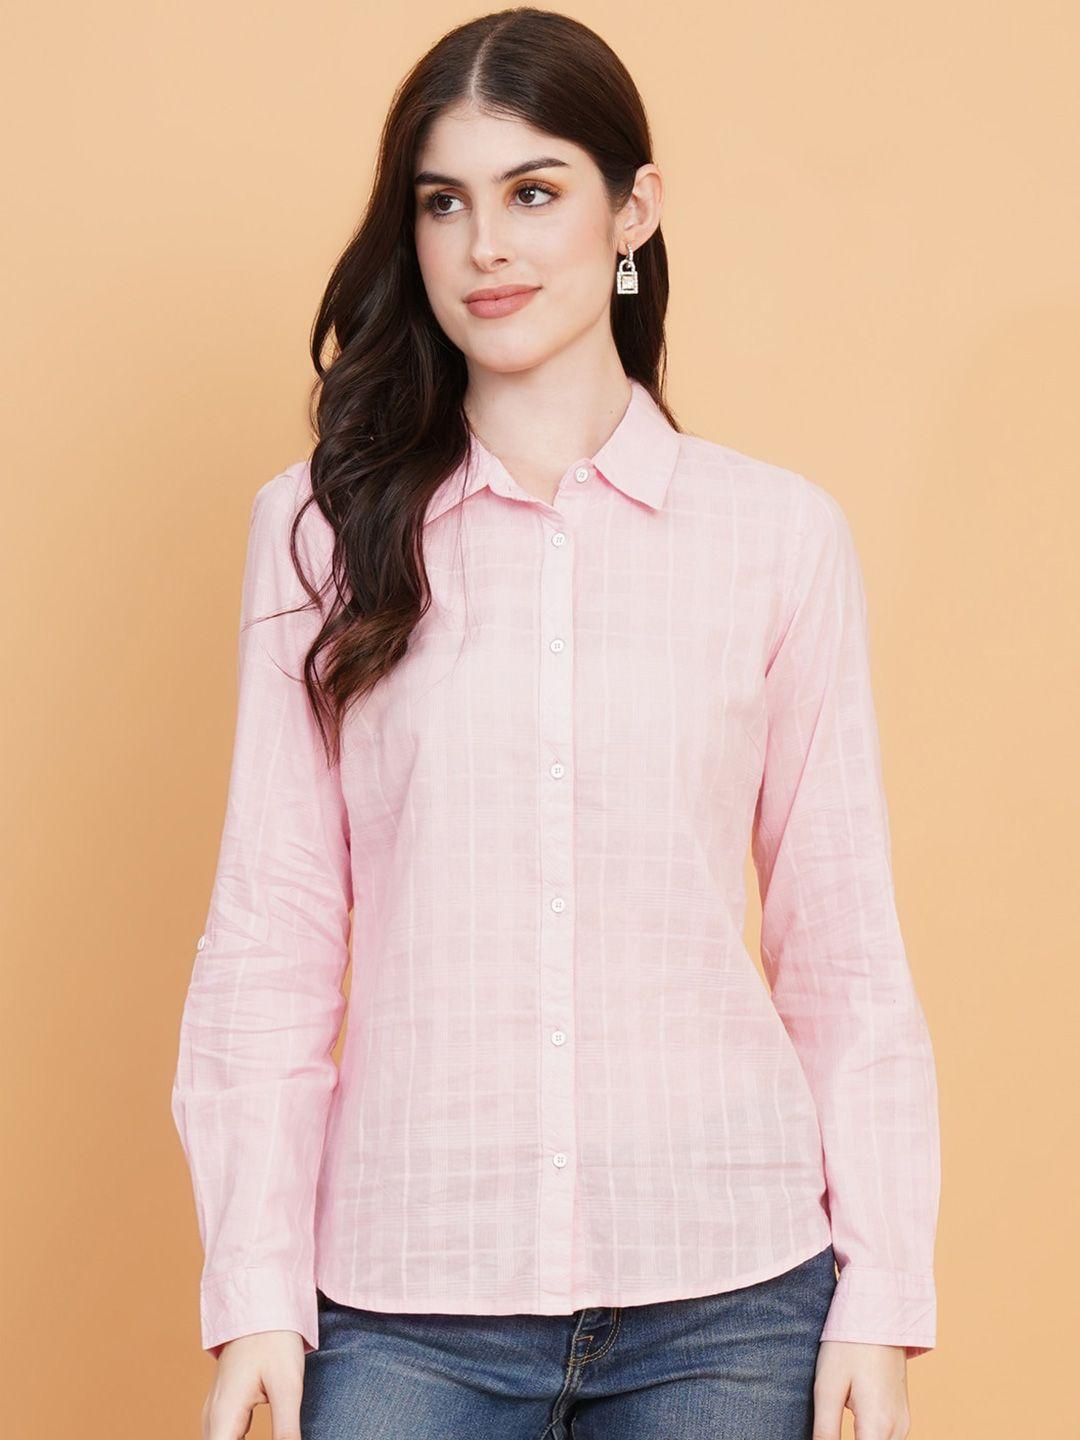 ix impression pink cotton shirt style top